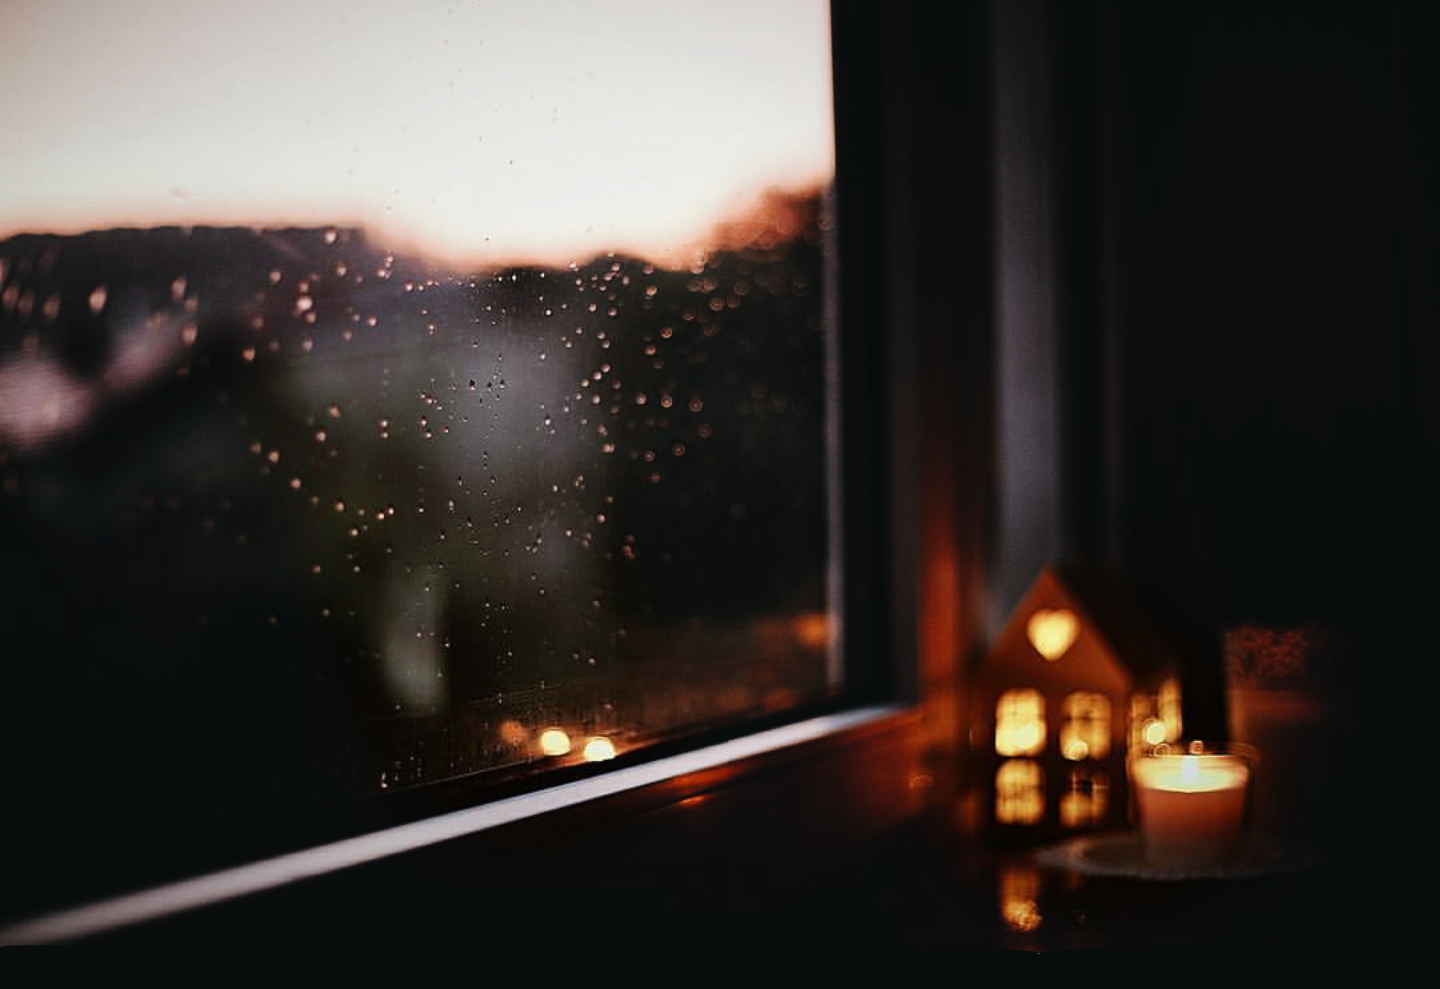 always feelin #cozy at home #night #rain #window